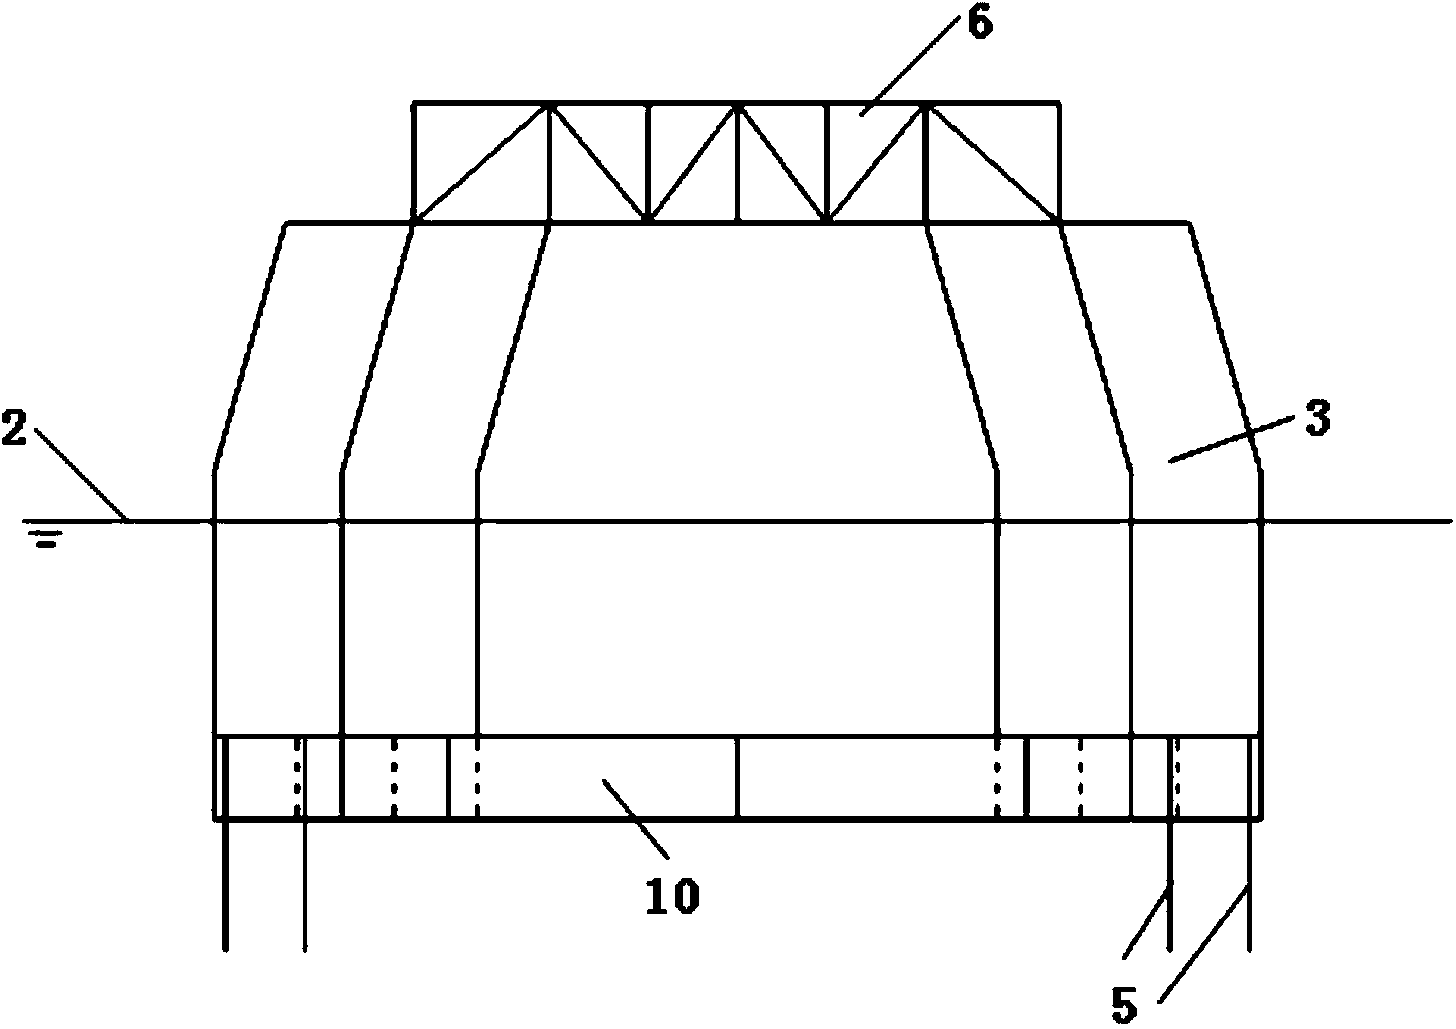 Extended tension leg platform on basis of oblique upright columns